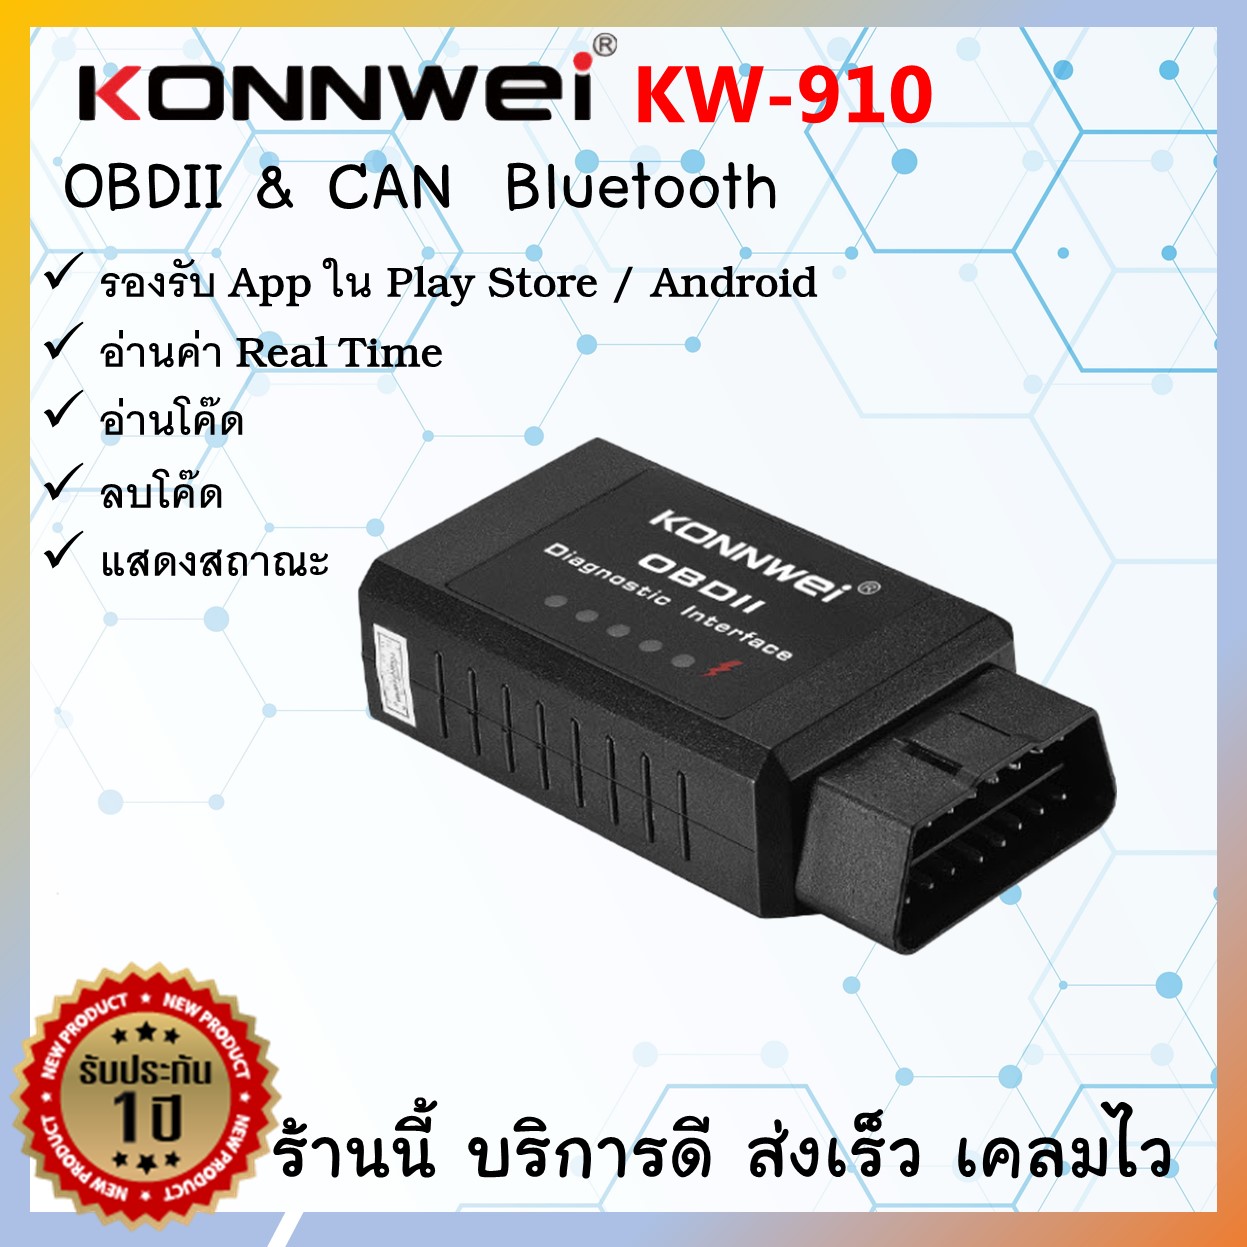 KONNWEI KW910 OBD II ส่งผ่าน Bluetooth อ่านความเร็วรถ ความเร็วรอบ อุณหภูมิ อ่านโค๊ด ลบโค๊ด อ่านค่า Real Time ร้านคนไทย ประกัน 1 ปี